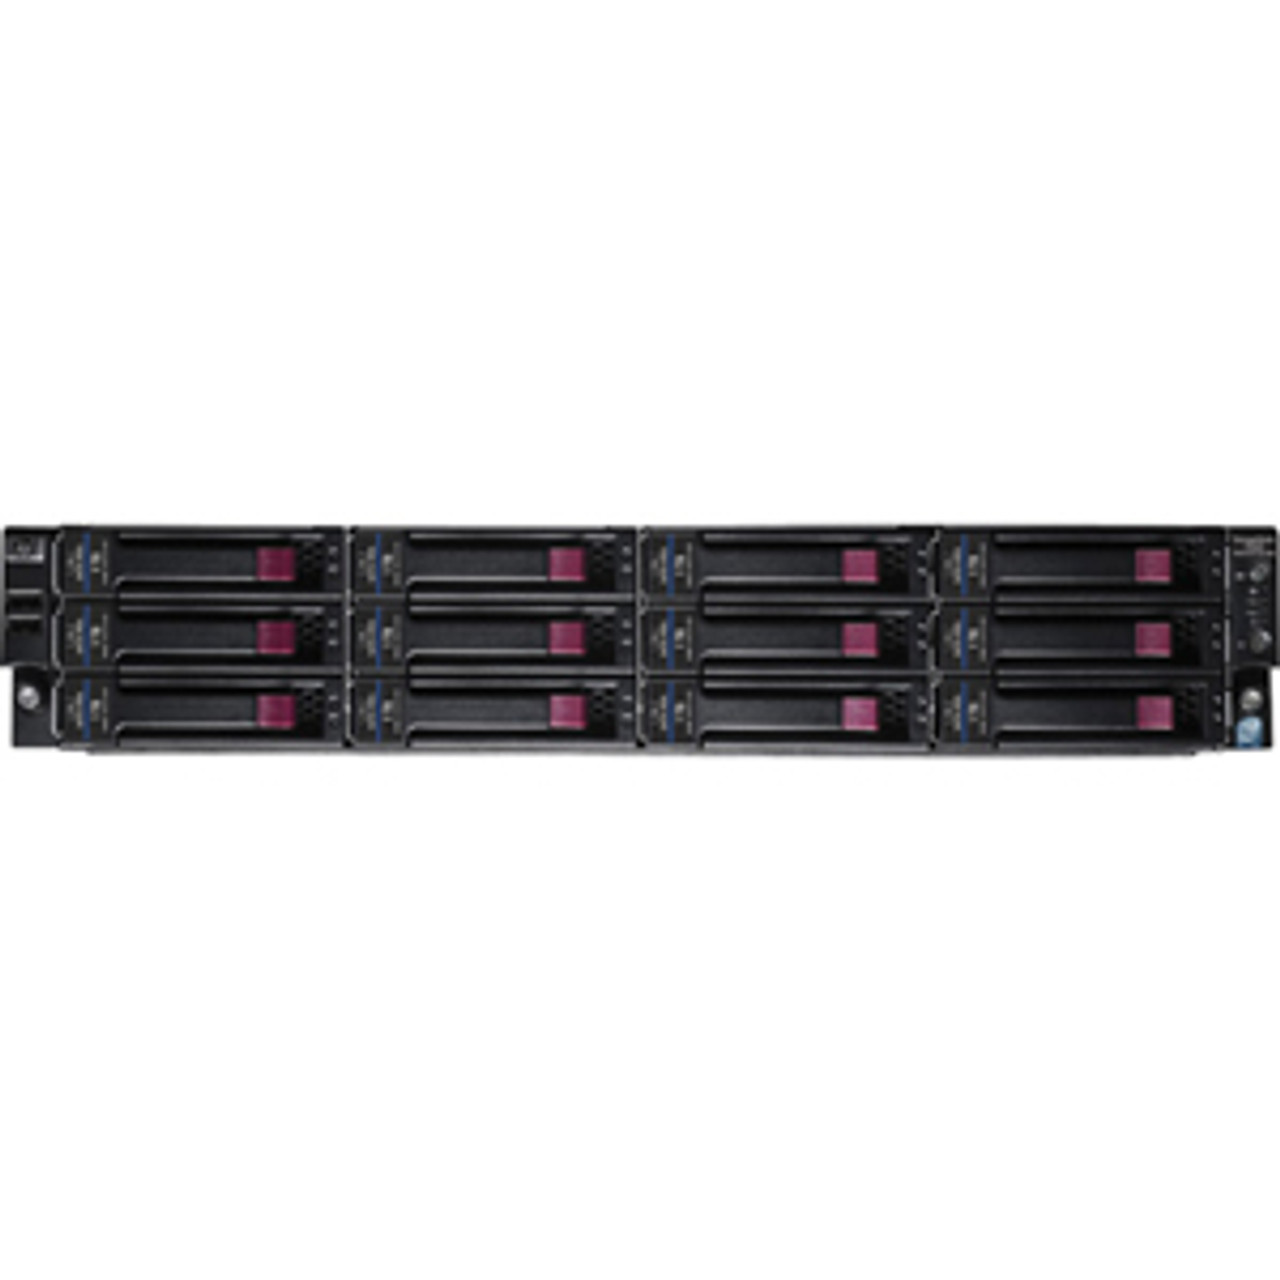 AW528B - HP StorageWorks X1600 Network Storage Server 1 x Intel Xeon E5520 2.26 GHz 292 GB (2 x 146 GB) USB RJ-45 Network HD-15 VGA Serial